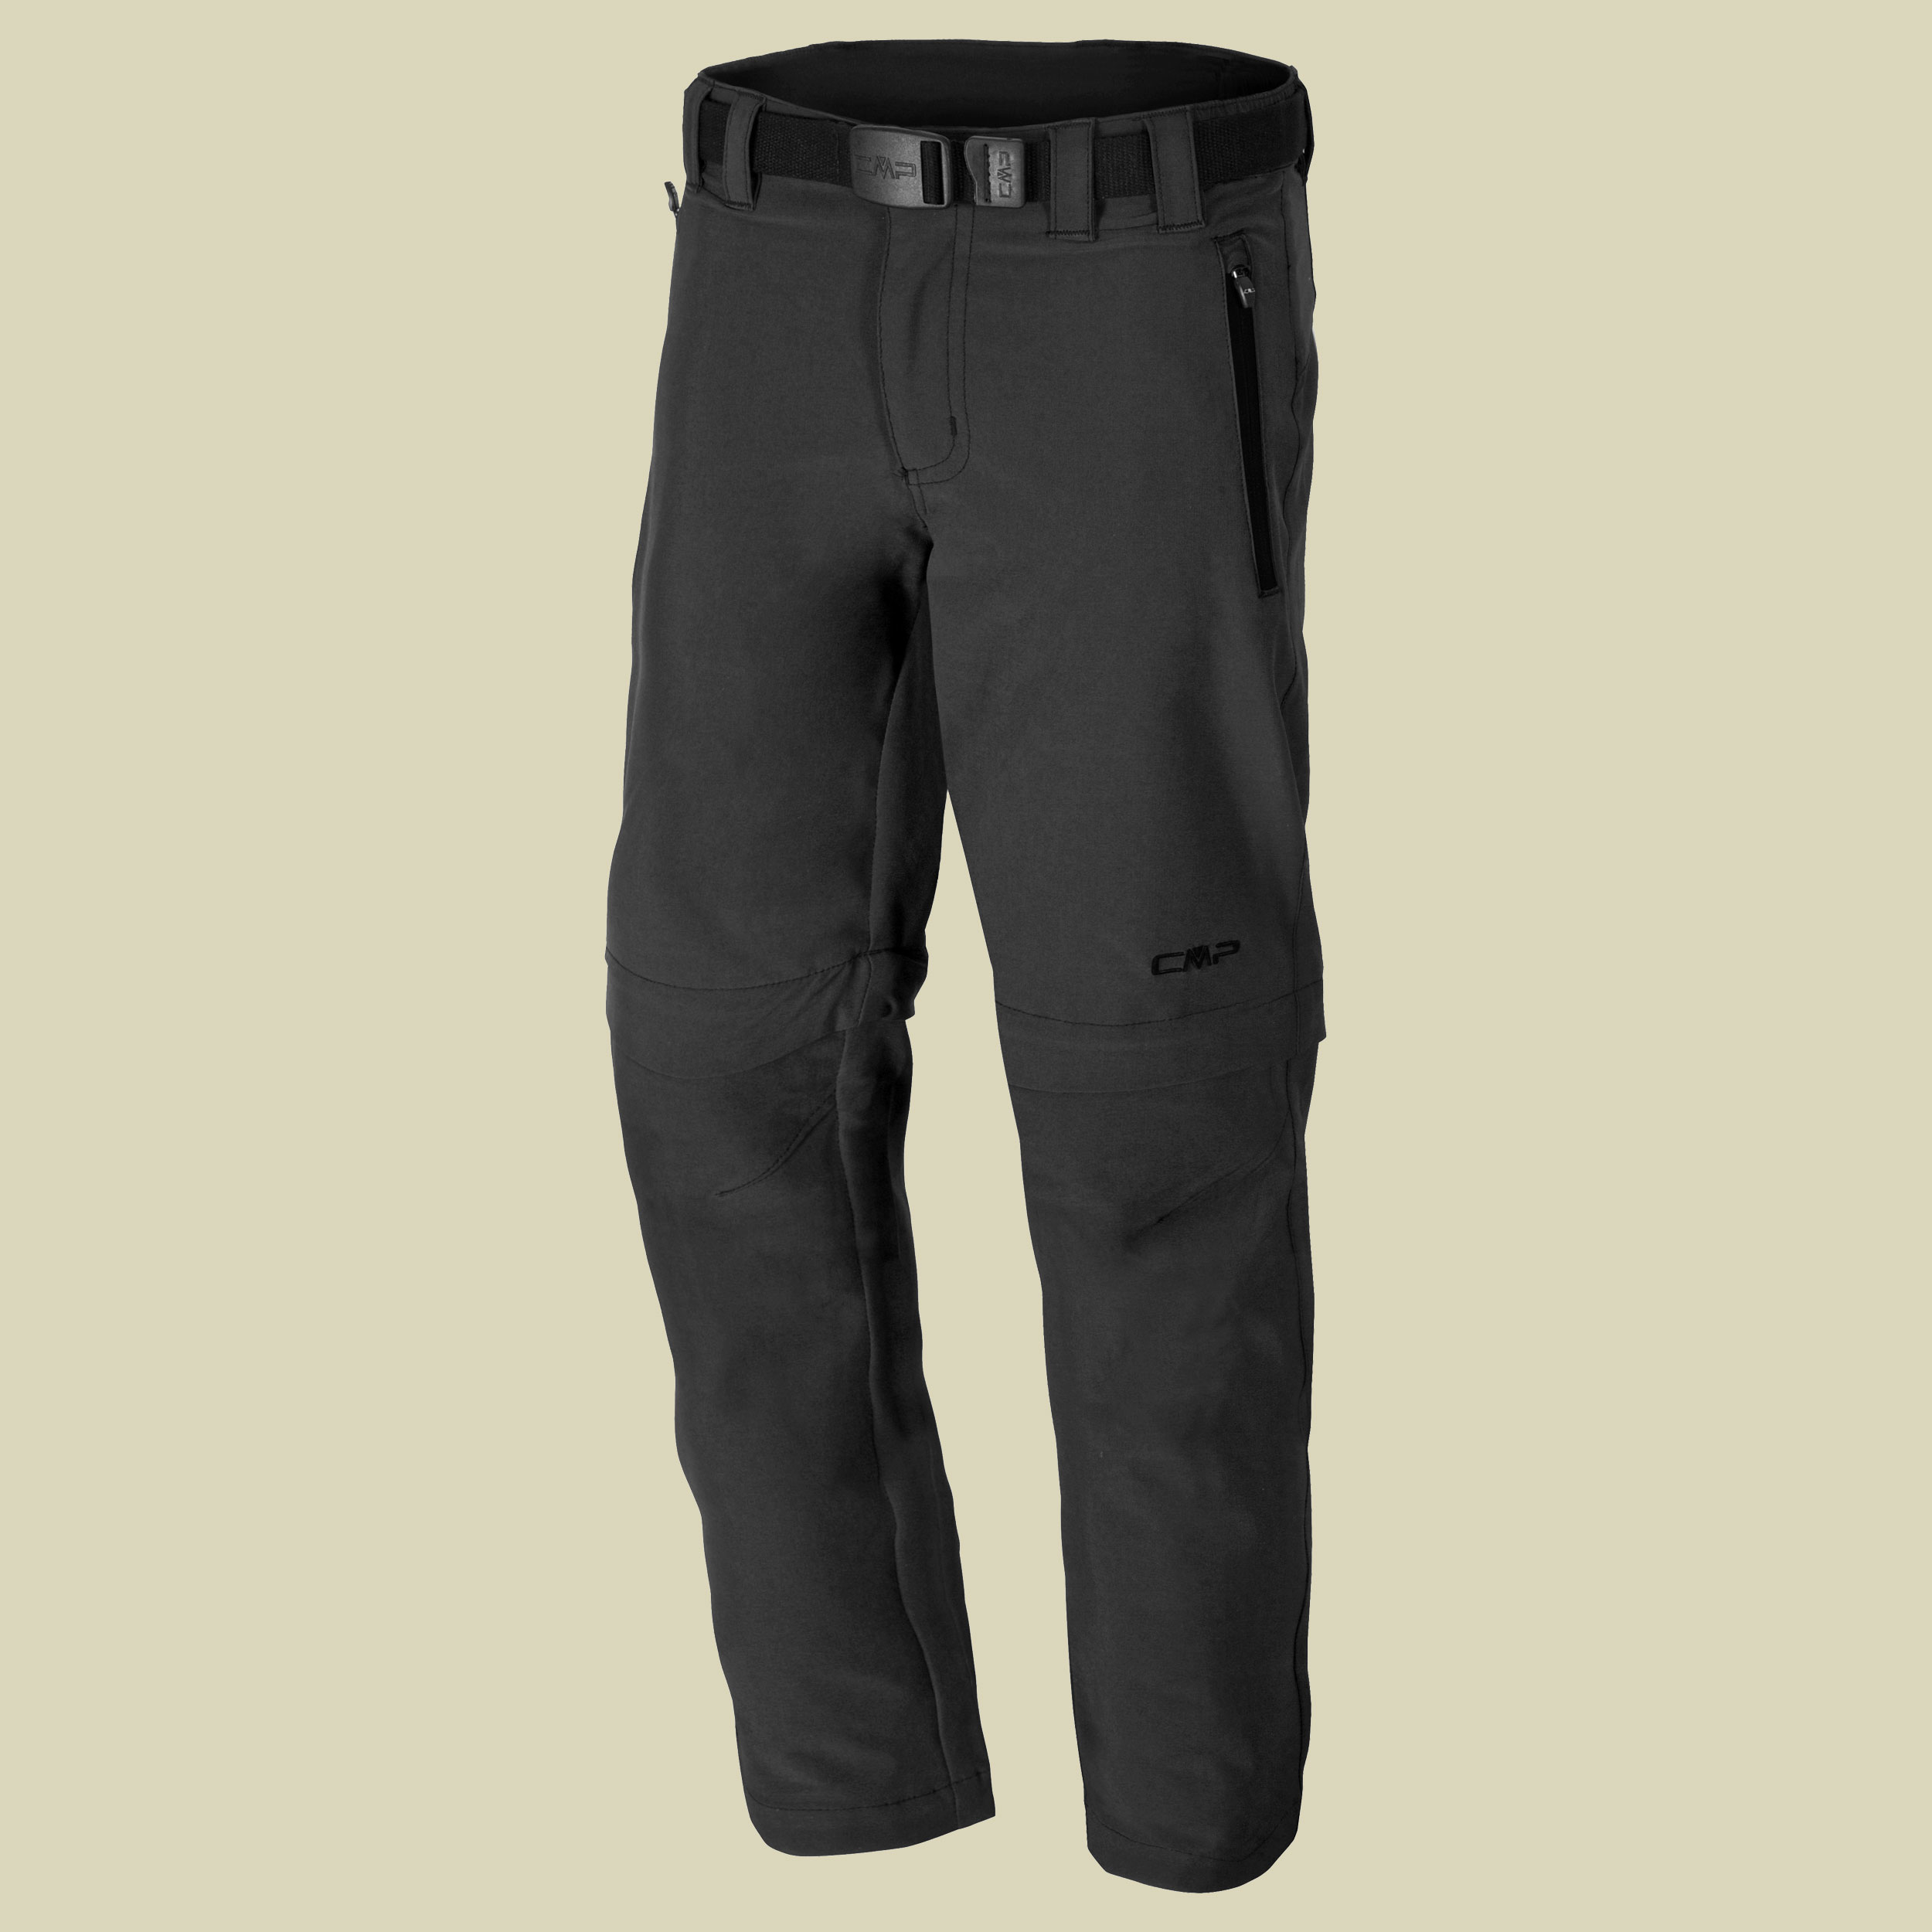 Man Long Pant Zip Off Stretch 3T51647 Größe 50 Farbe U423 antracite-nero